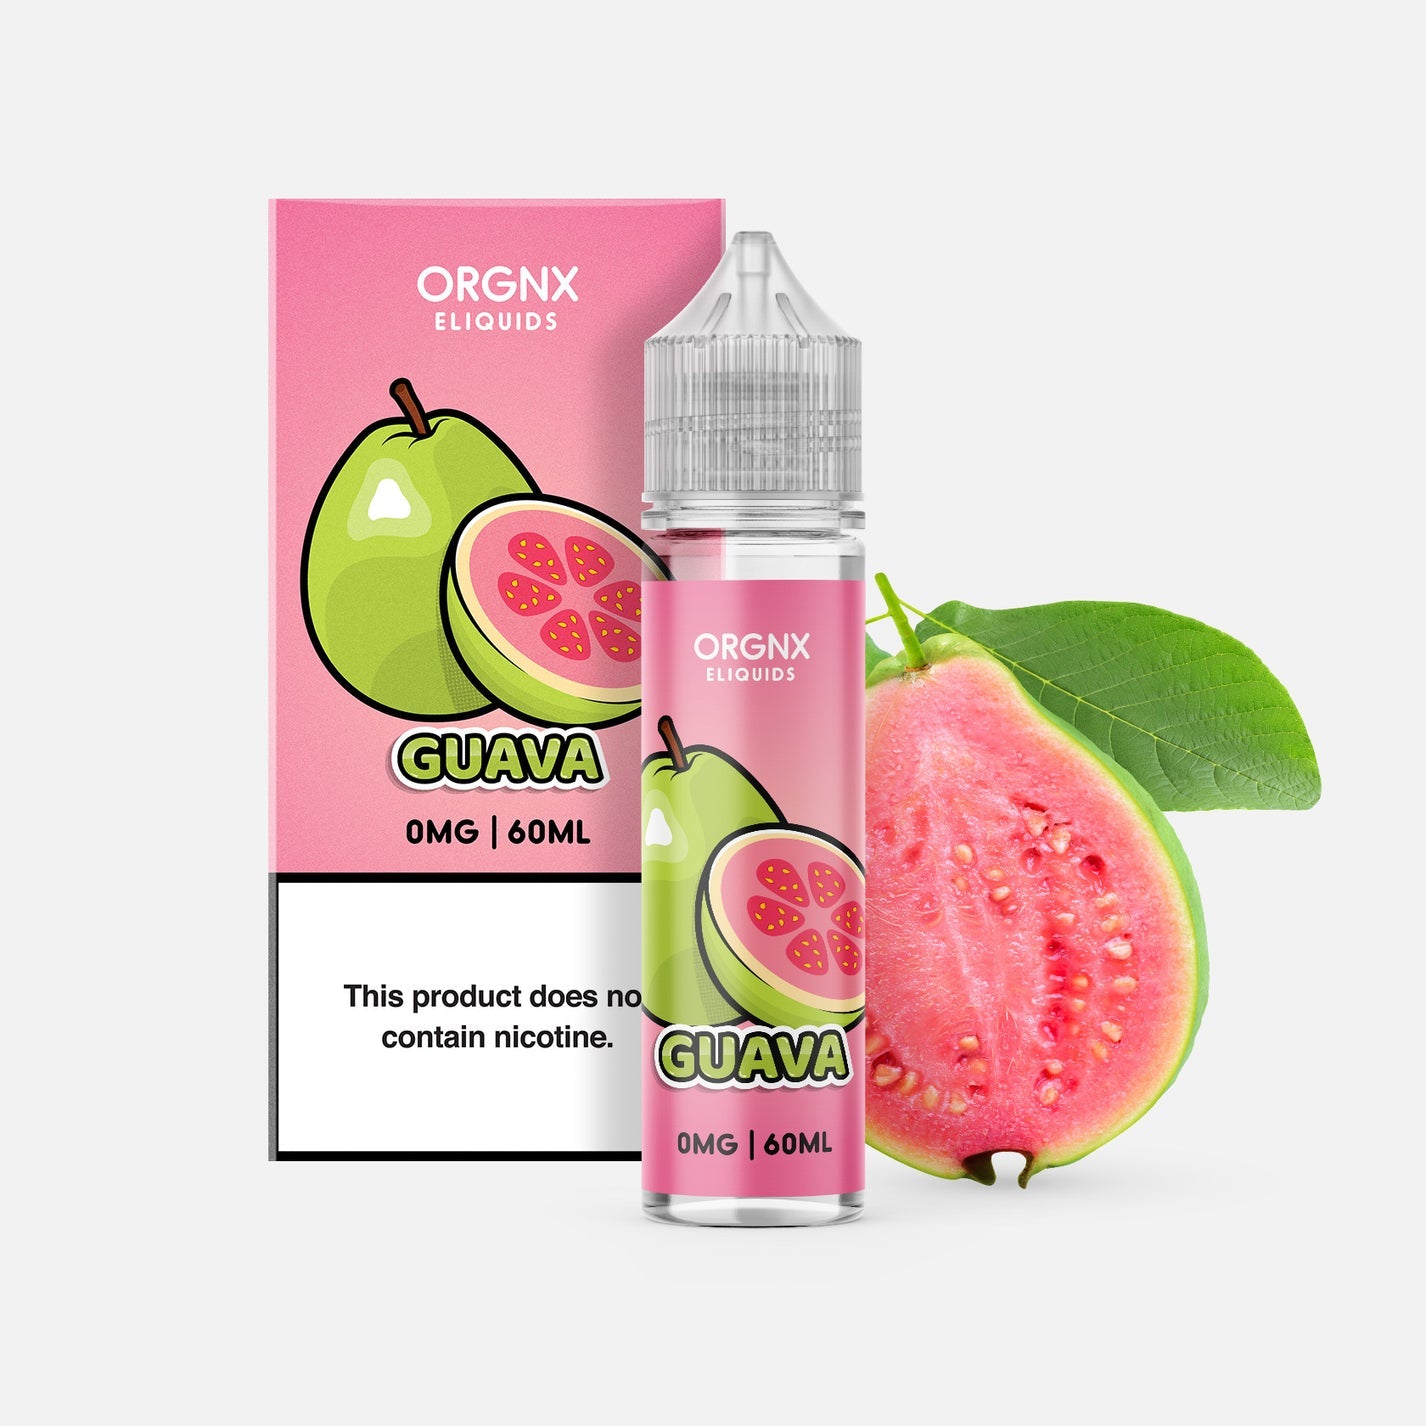 ORGNX: Guava